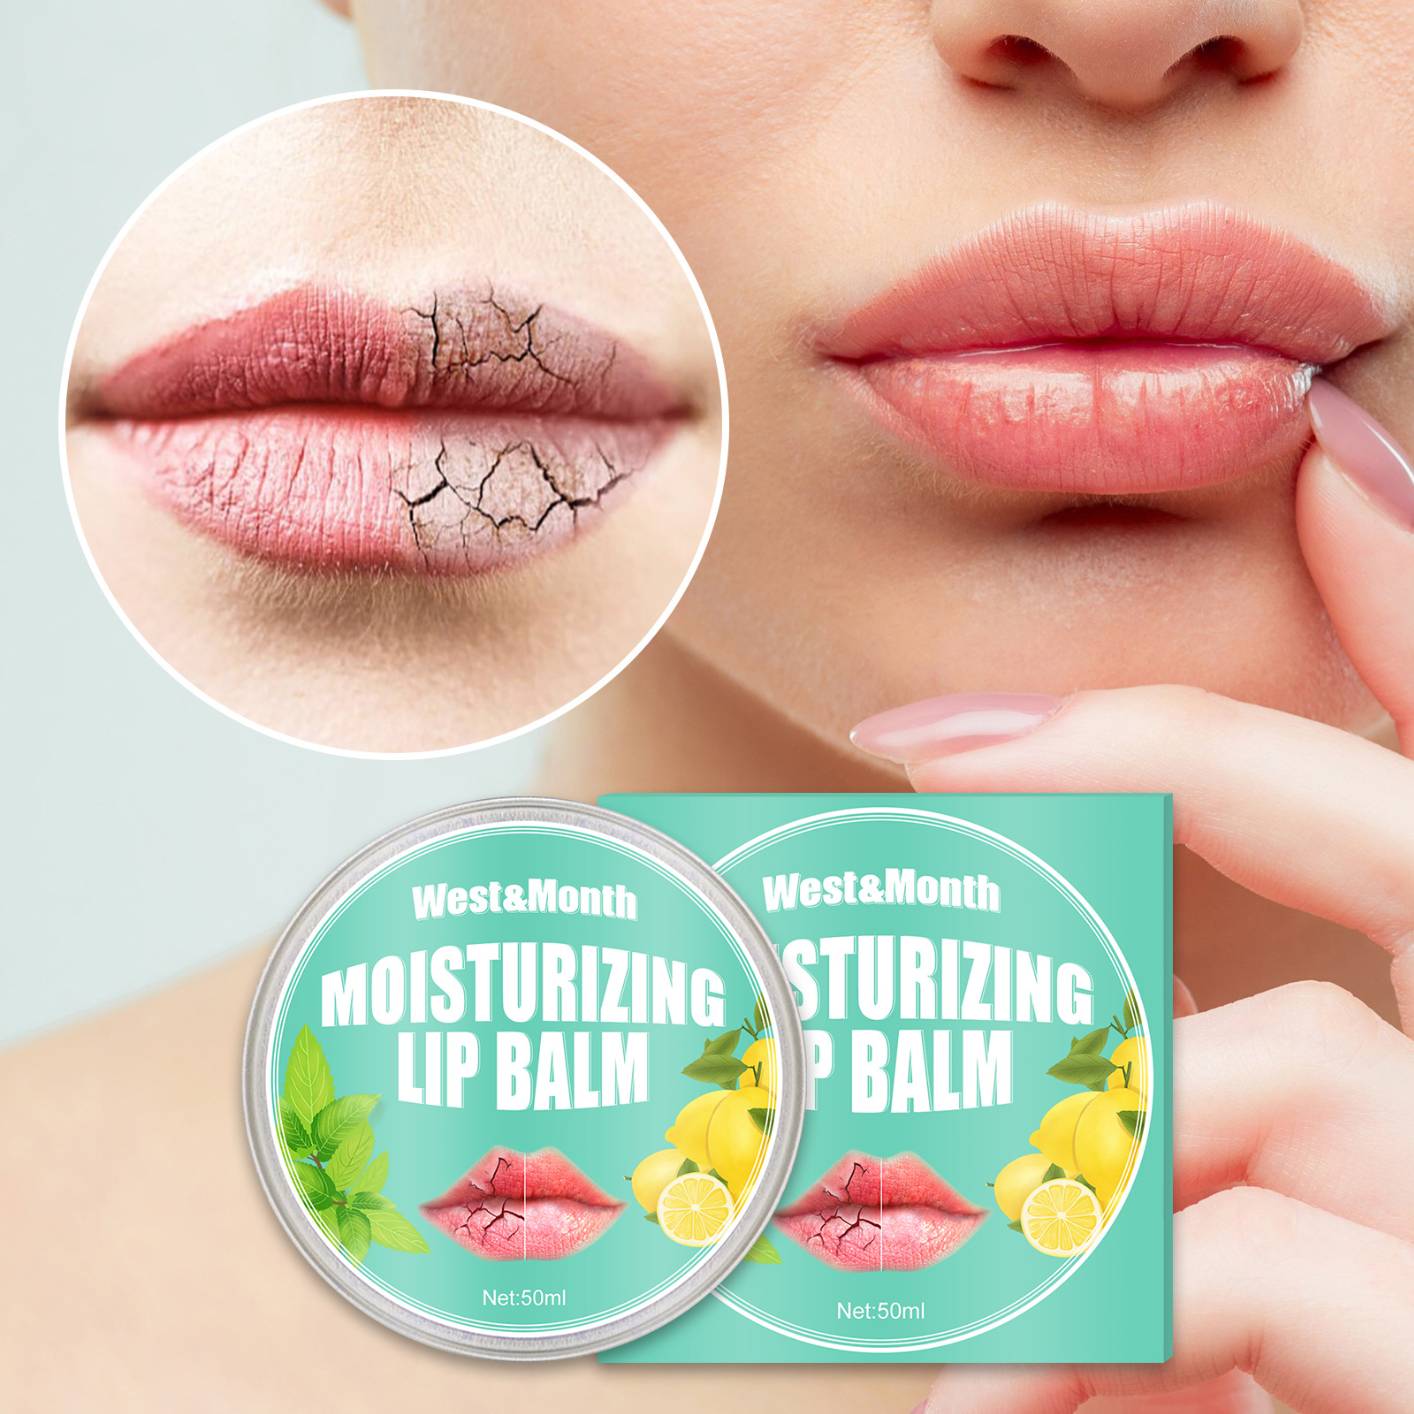 Moisturizing Repair Anti-dry Lip Balm, Nourishing and Moisturizing Lips Non-greasy Lip Balm - Mint Lemon Flavors